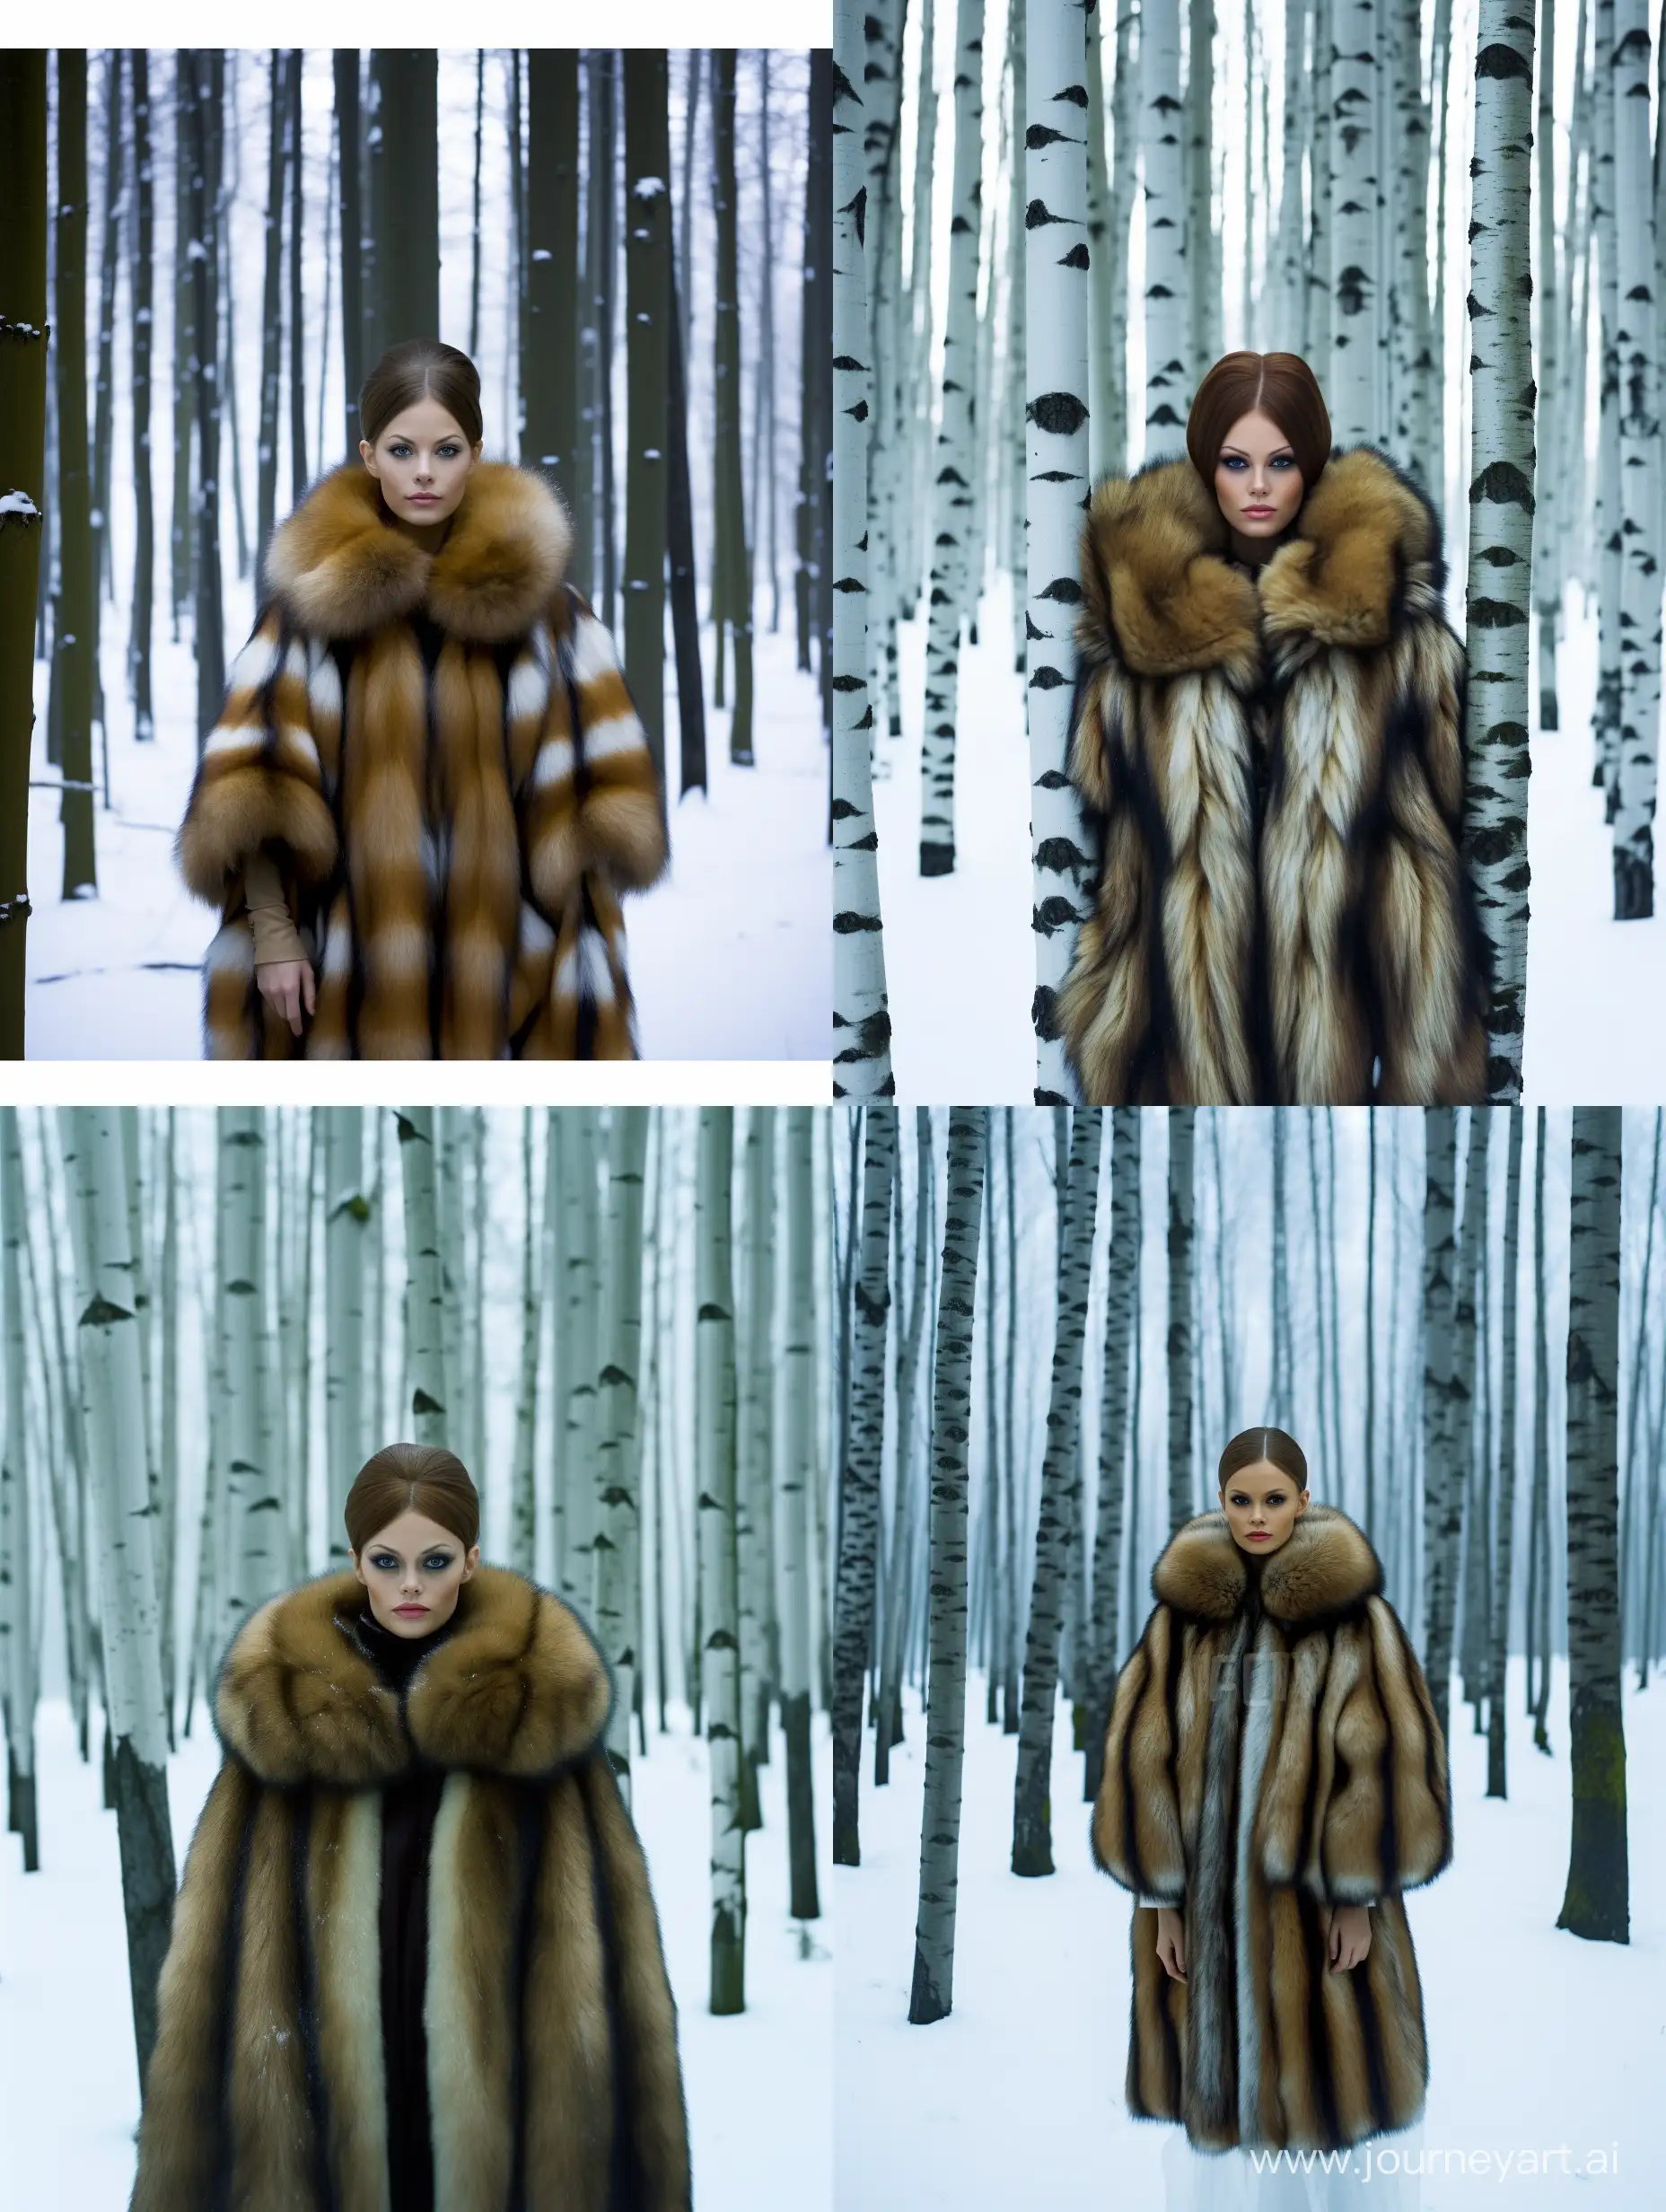 Stylish-Woman-in-Mink-Coat-Captured-in-Bold-Winter-Forest-Scene-USSR-1980s